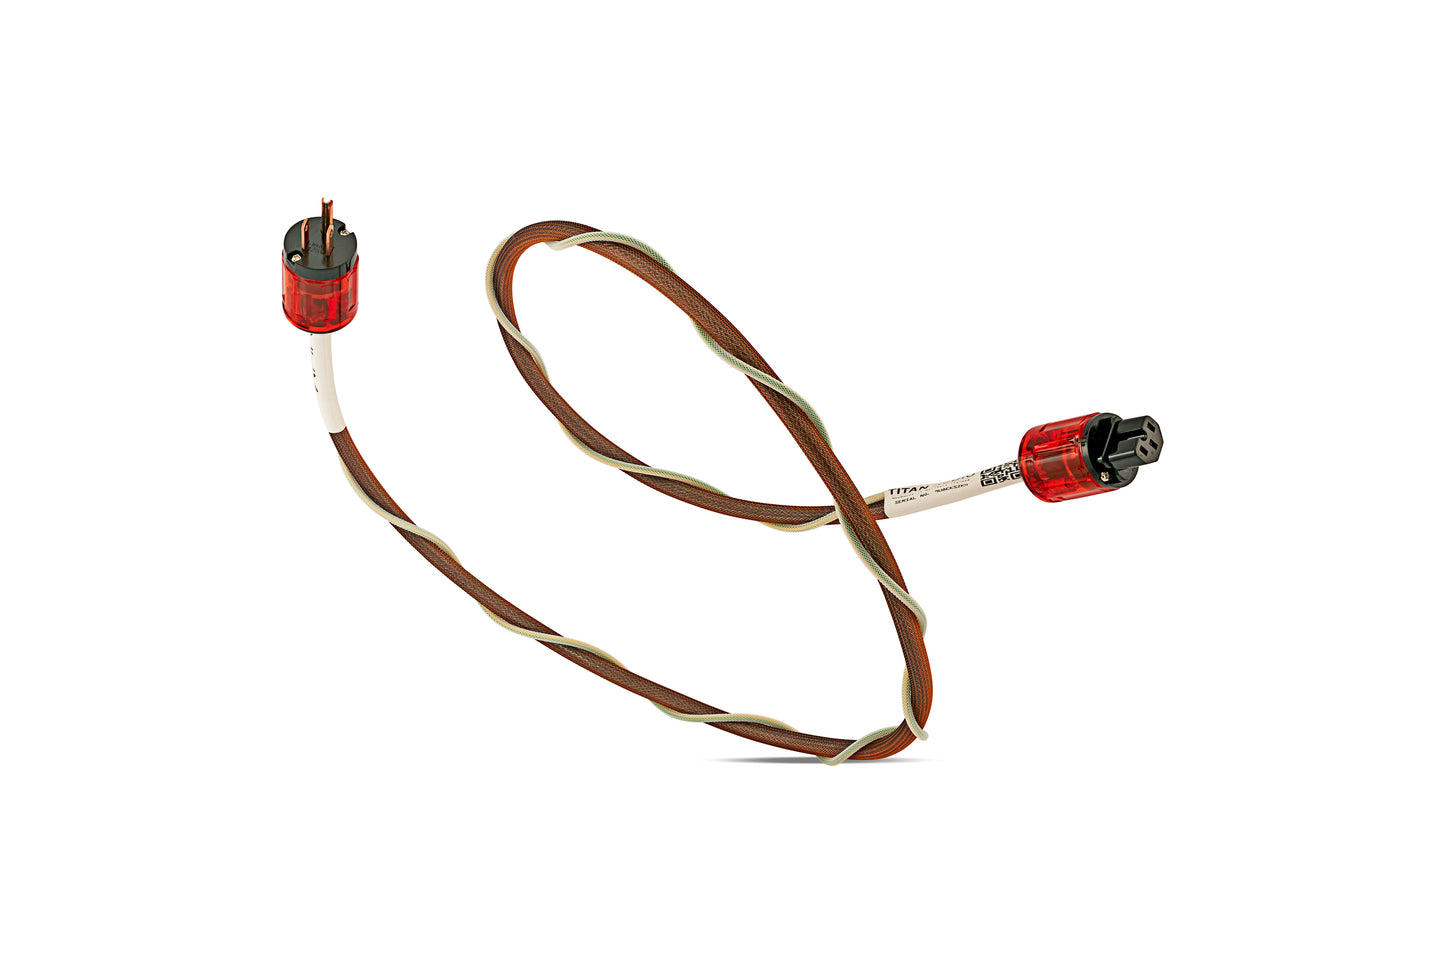 Nyx Signature Mains Cable